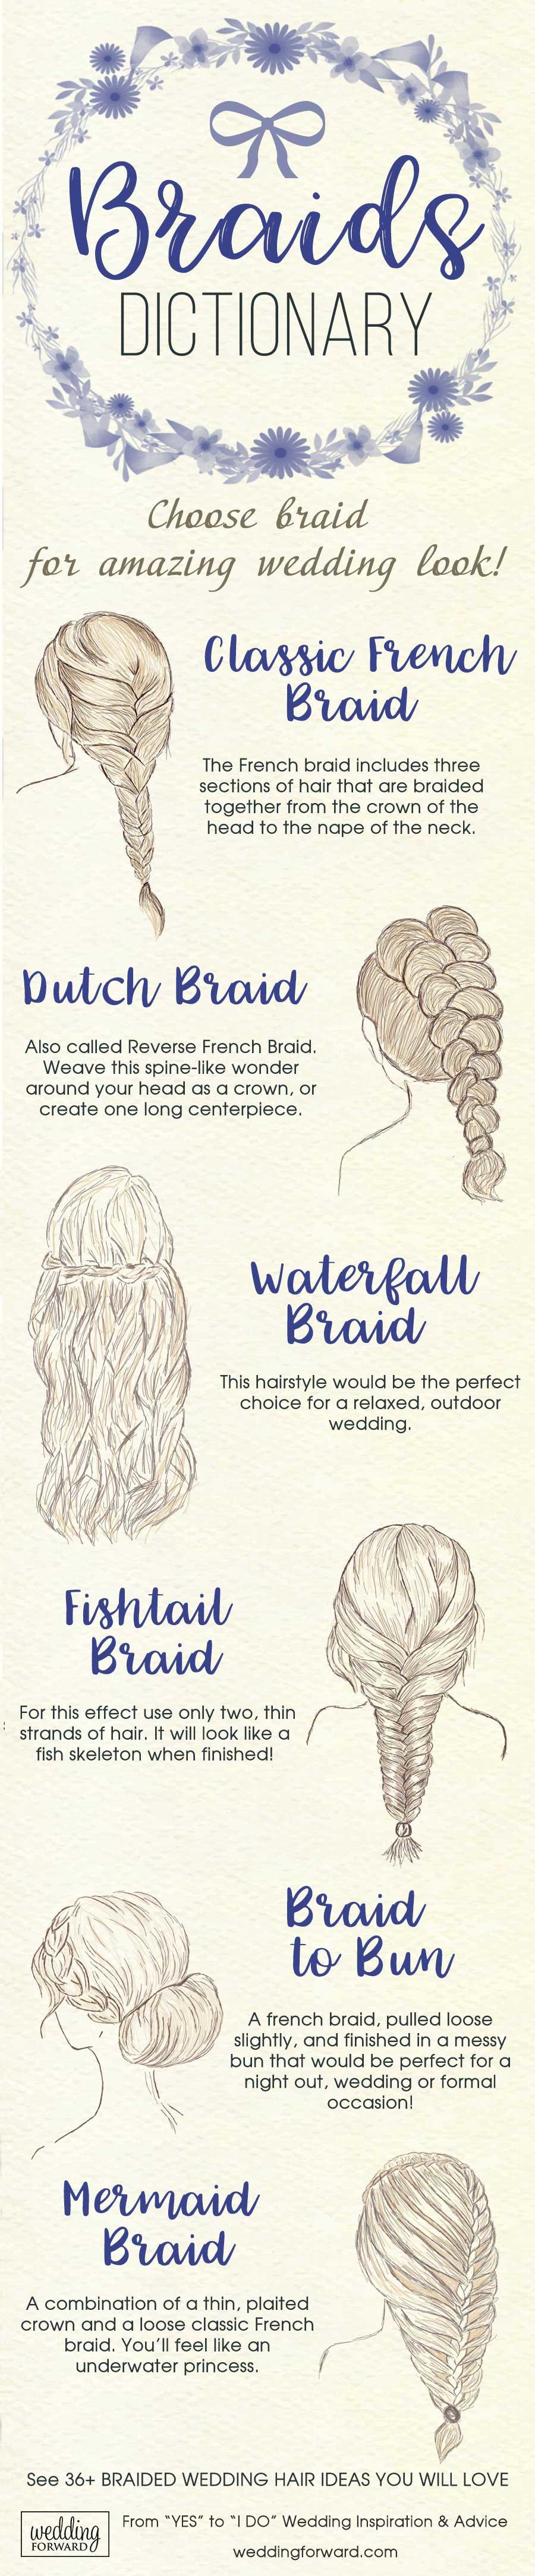 braids dictionary braided wedding hairstyle ideas